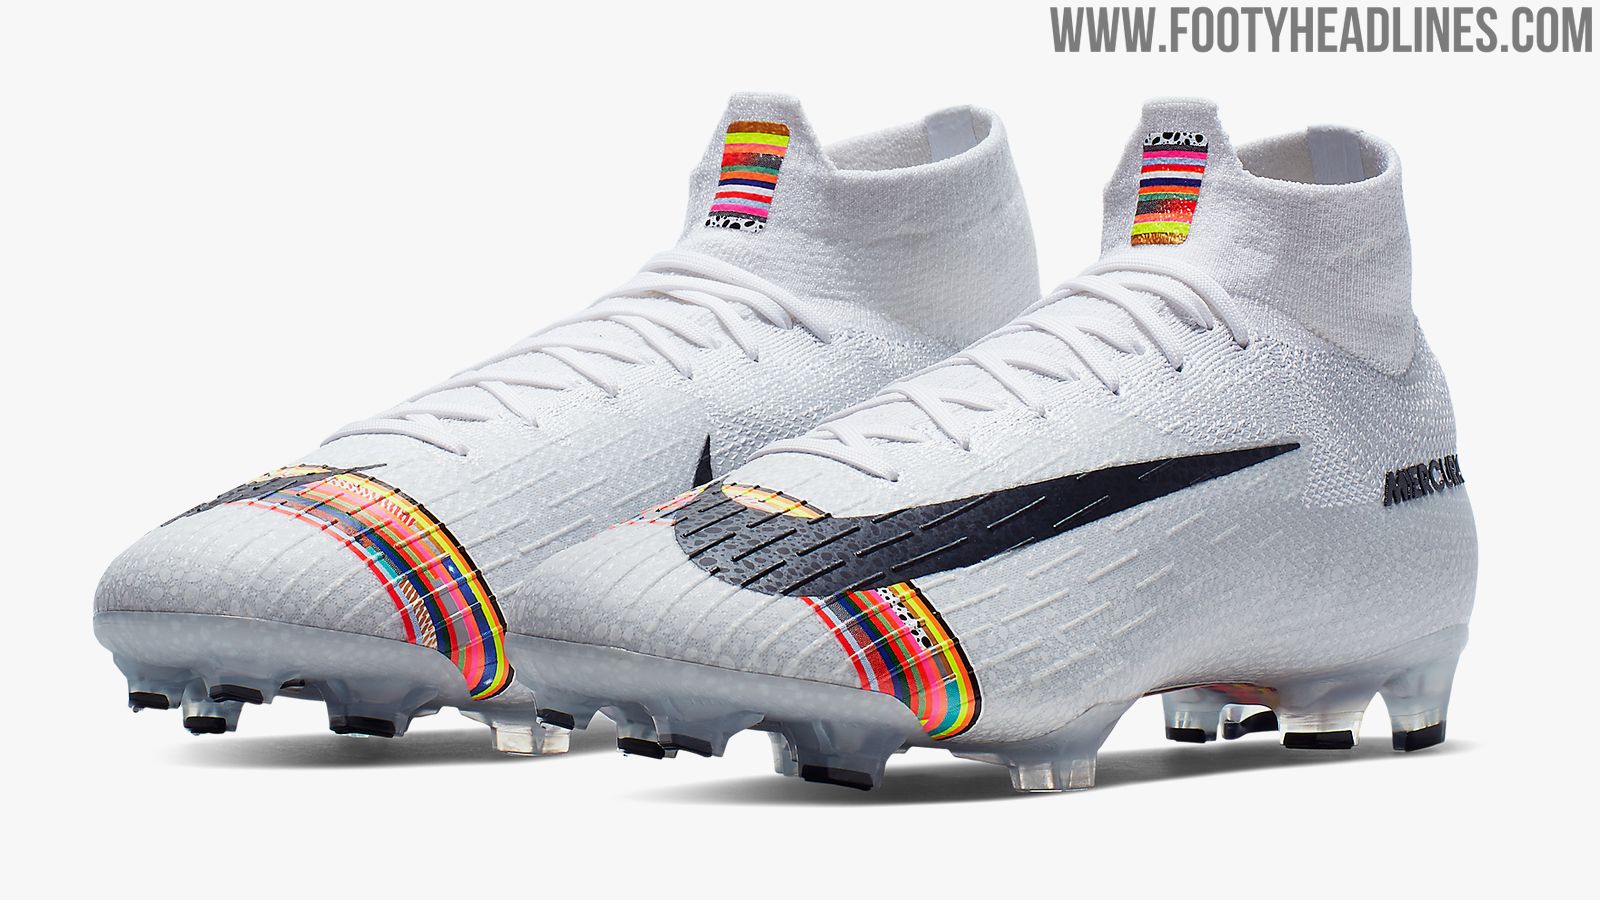 Nike Ronaldo 2019 Boots Released - Footy Headlines